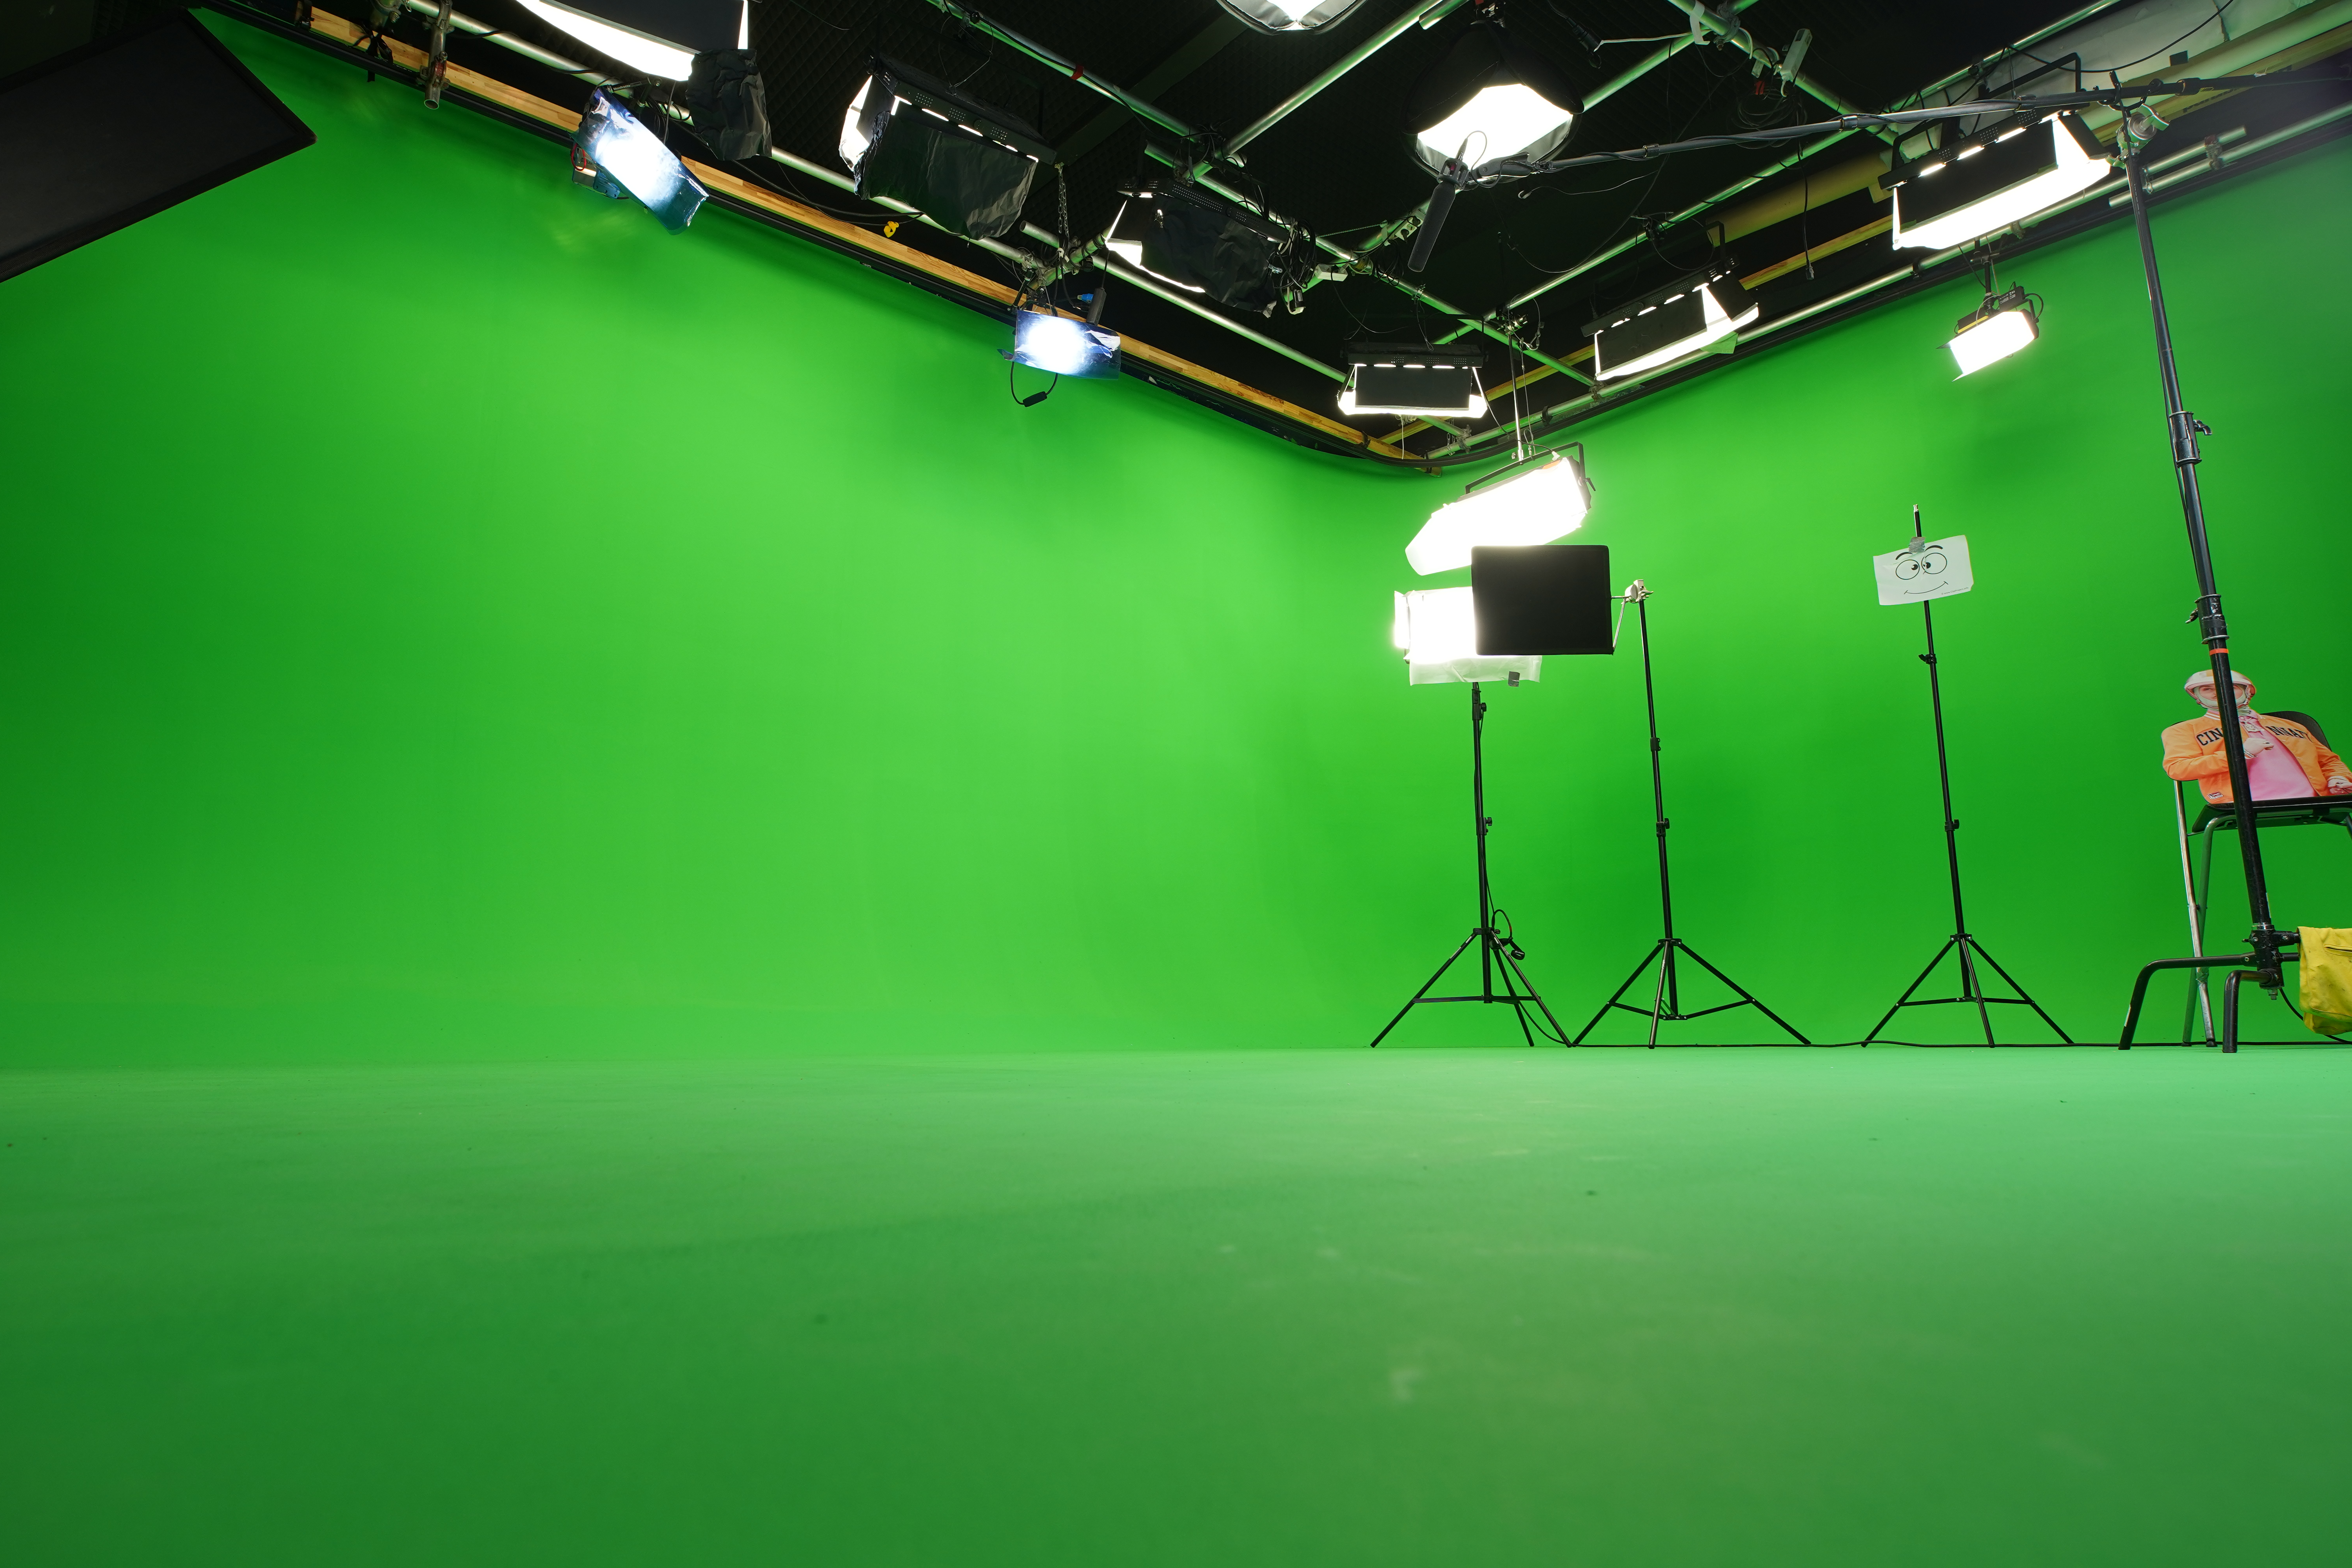 Greenscreen Studio with illumination equipment